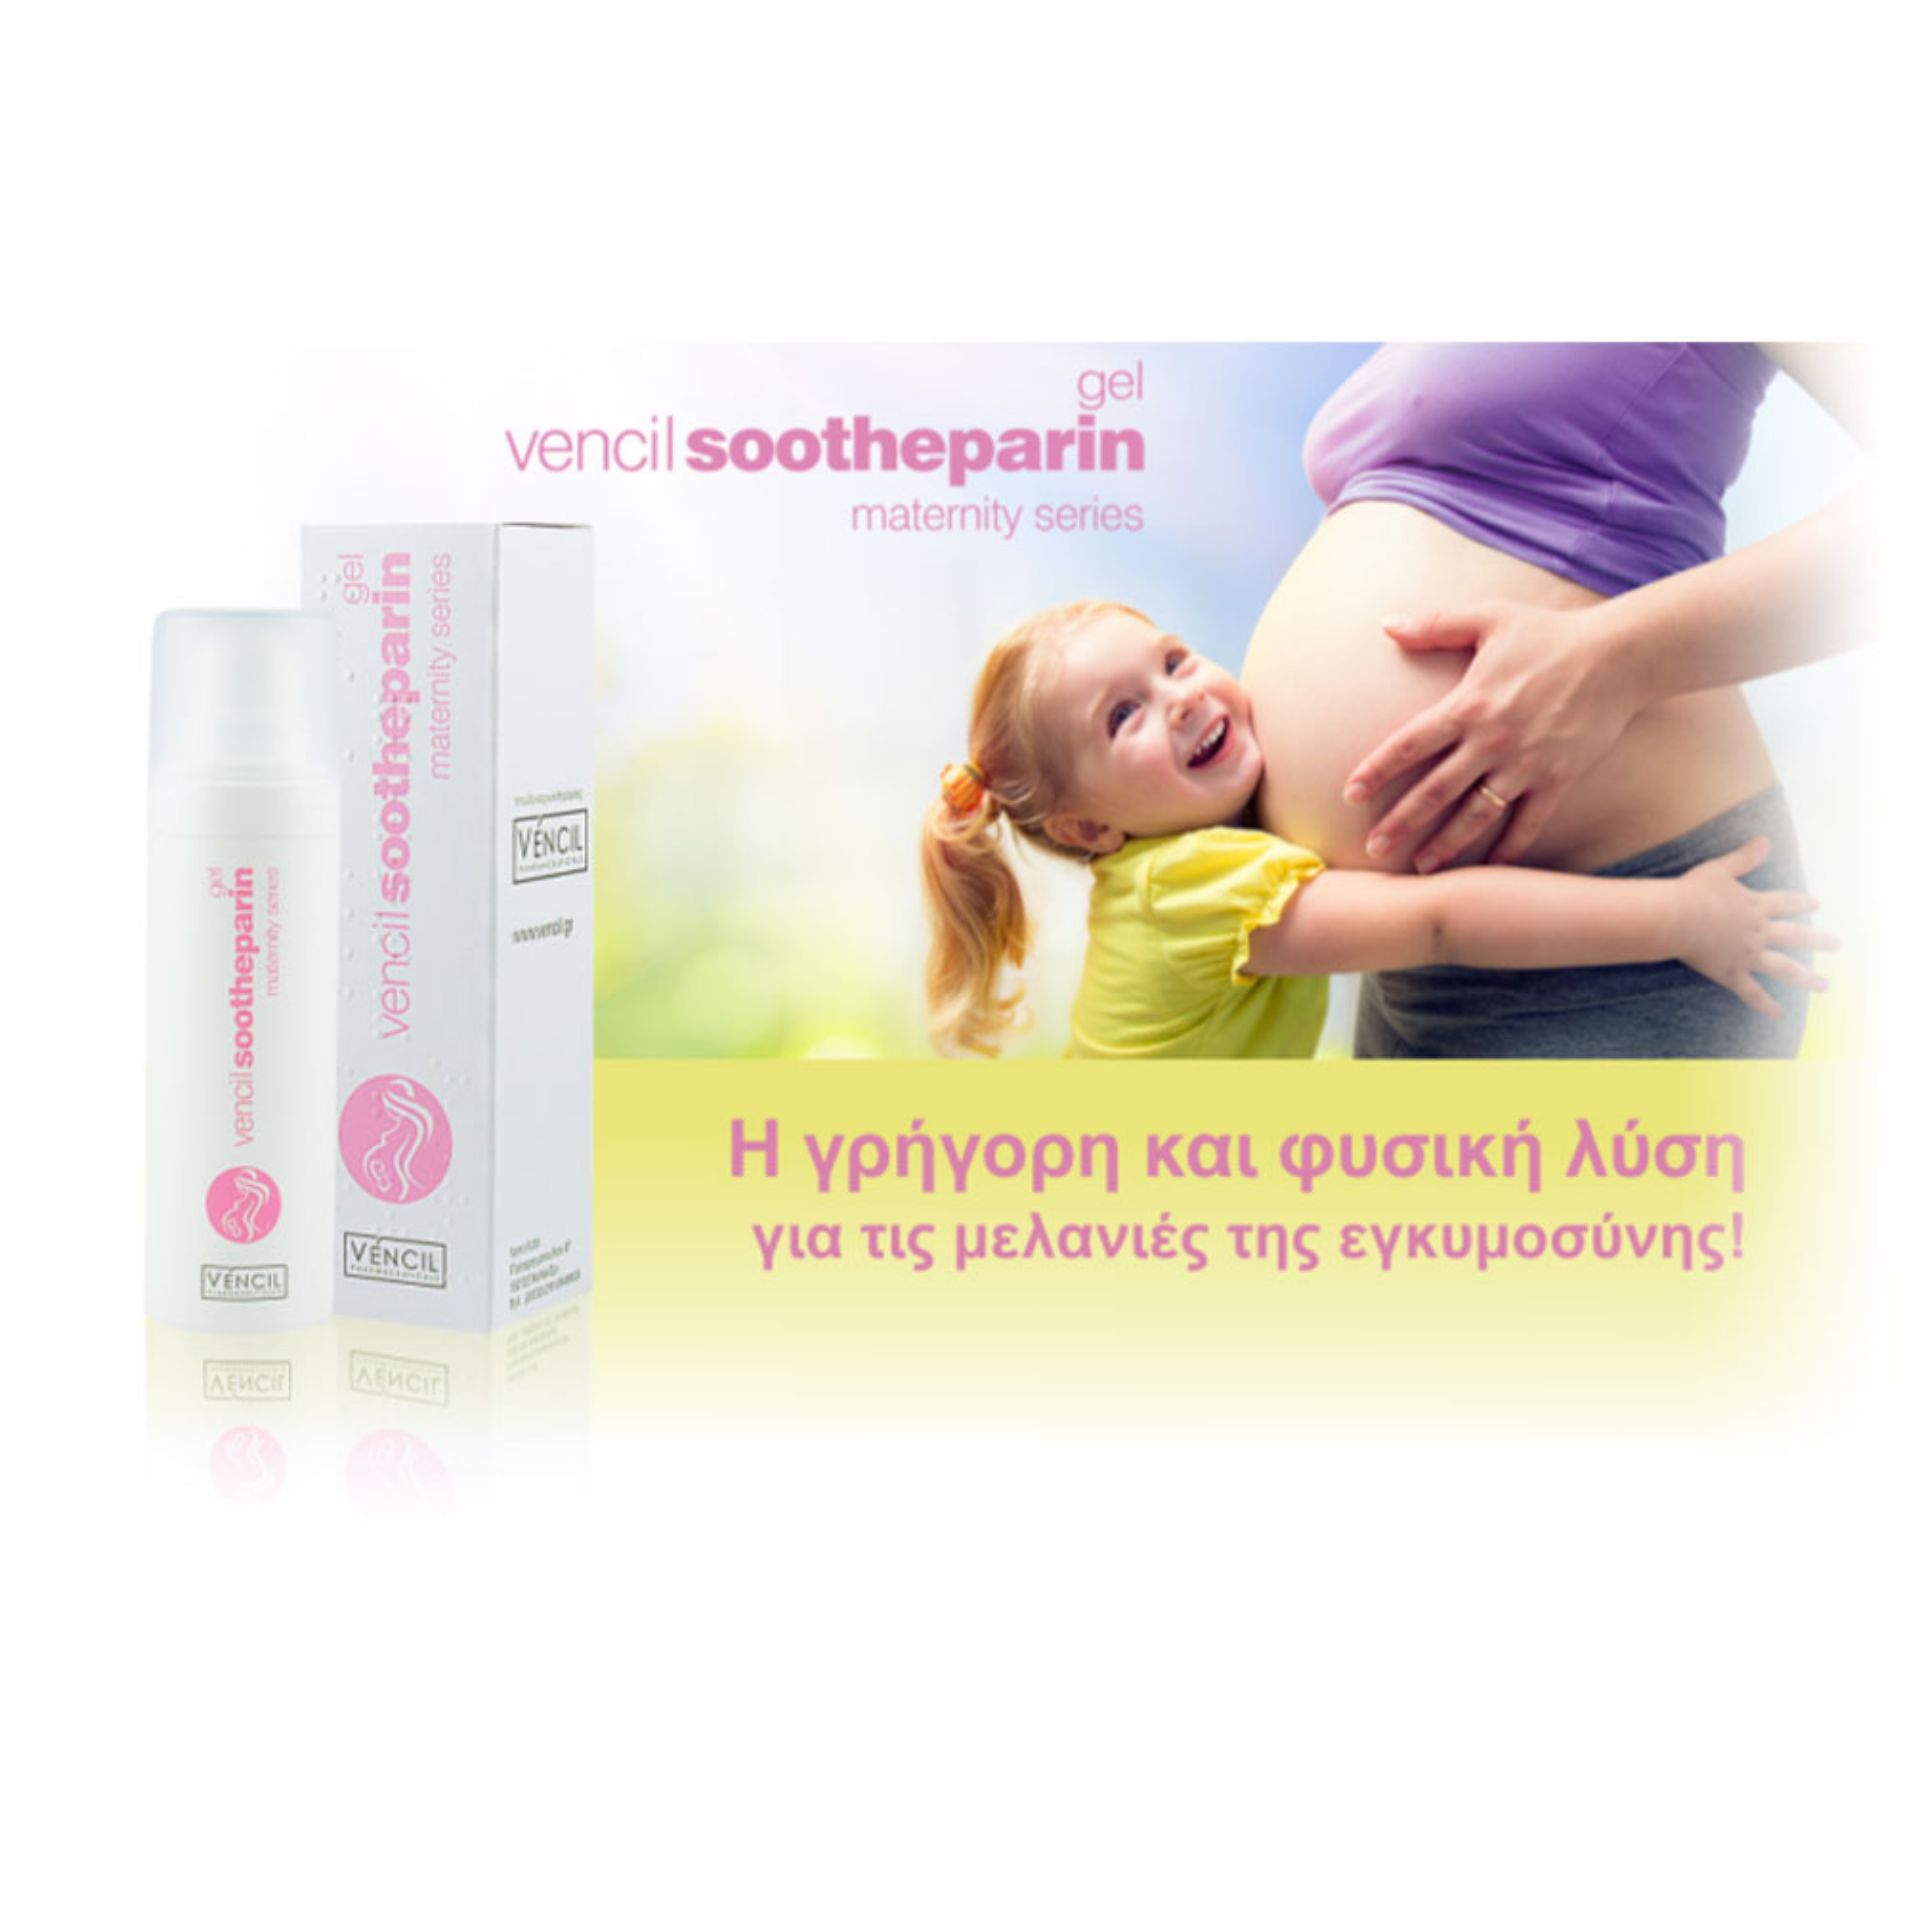 Aρθρο για το vencil sootheparin στο mothersblog.gr, το ειδκό site για εγκύους!